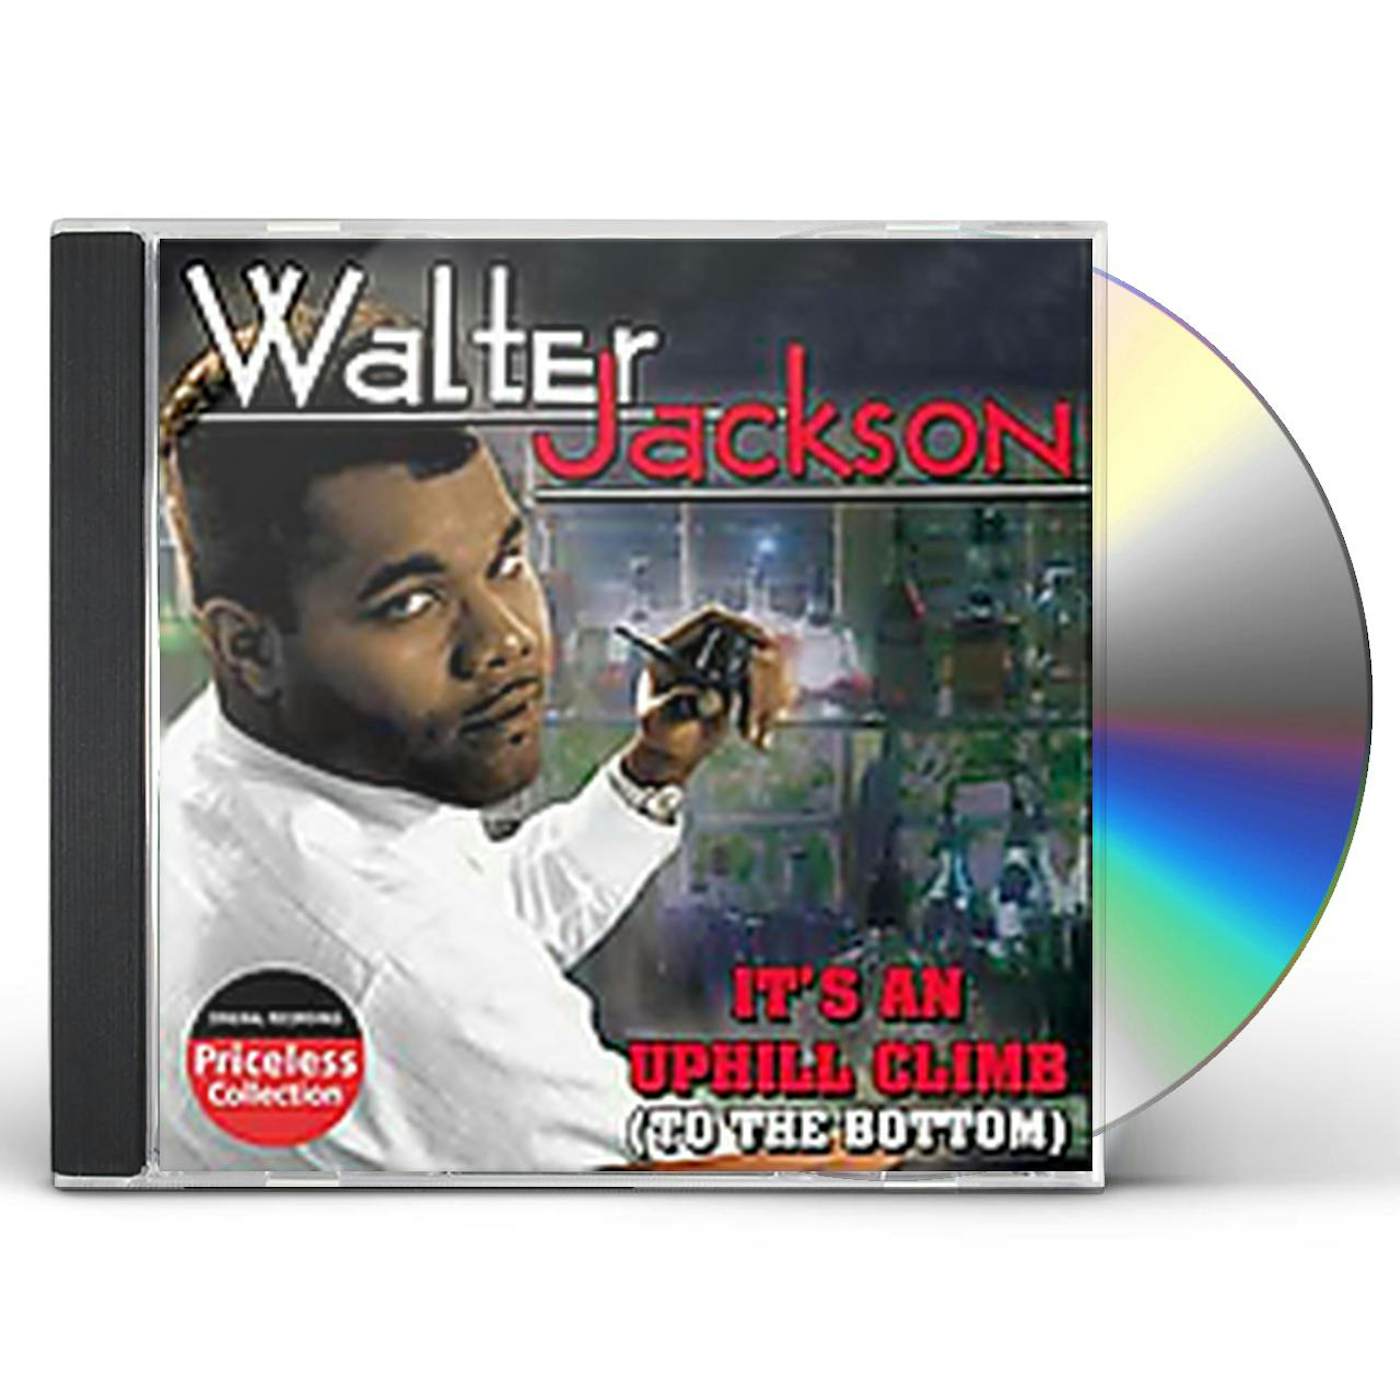 Walter Jackson IT'S AN UPHILL CLIMB CD